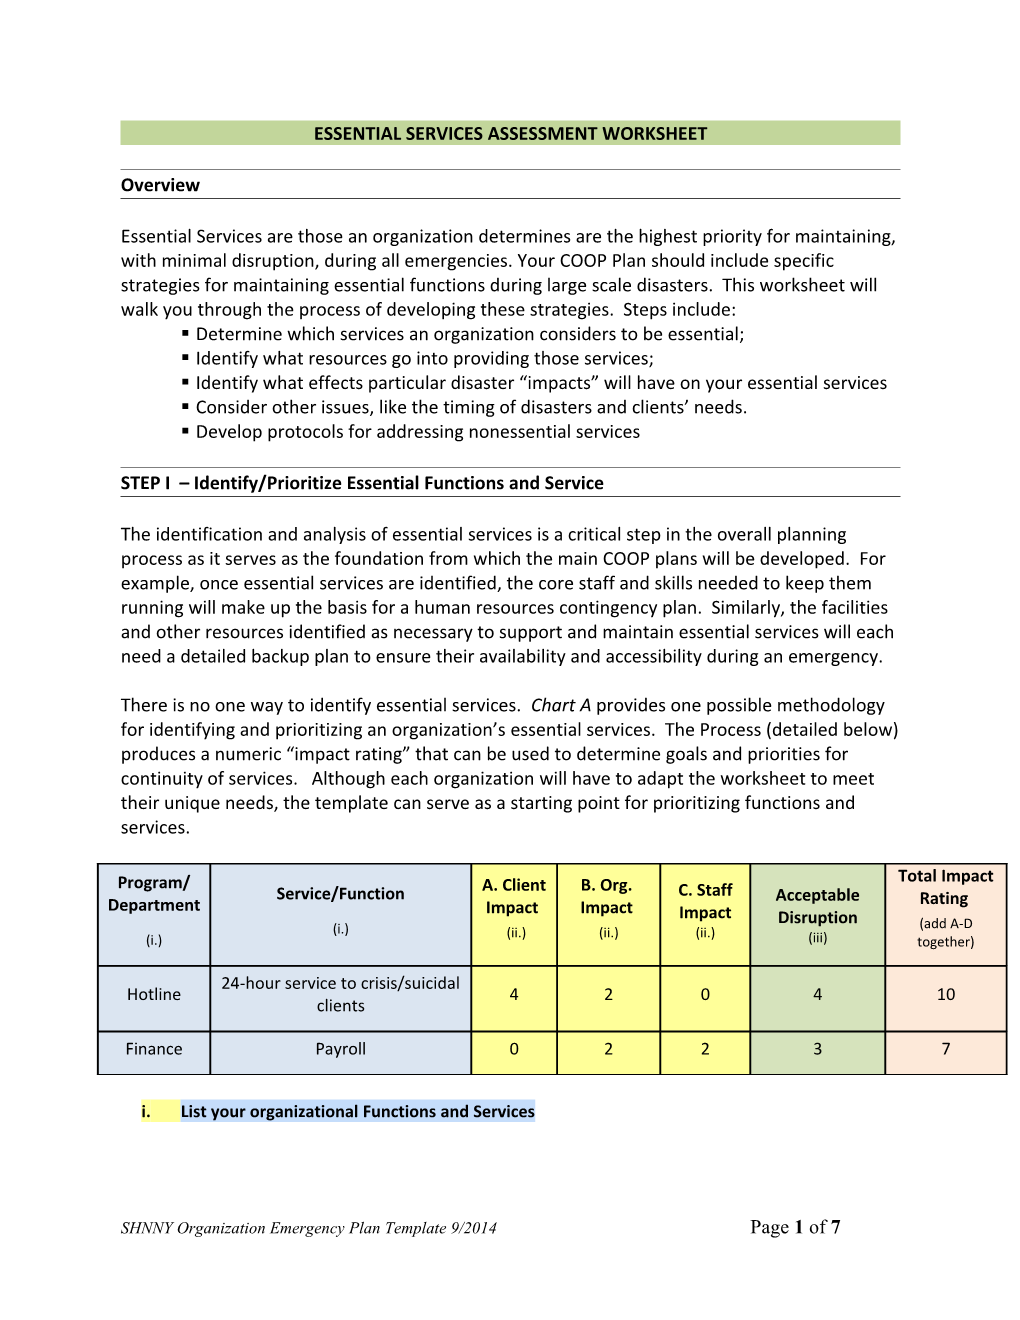 Essential Services Assessment Worksheet